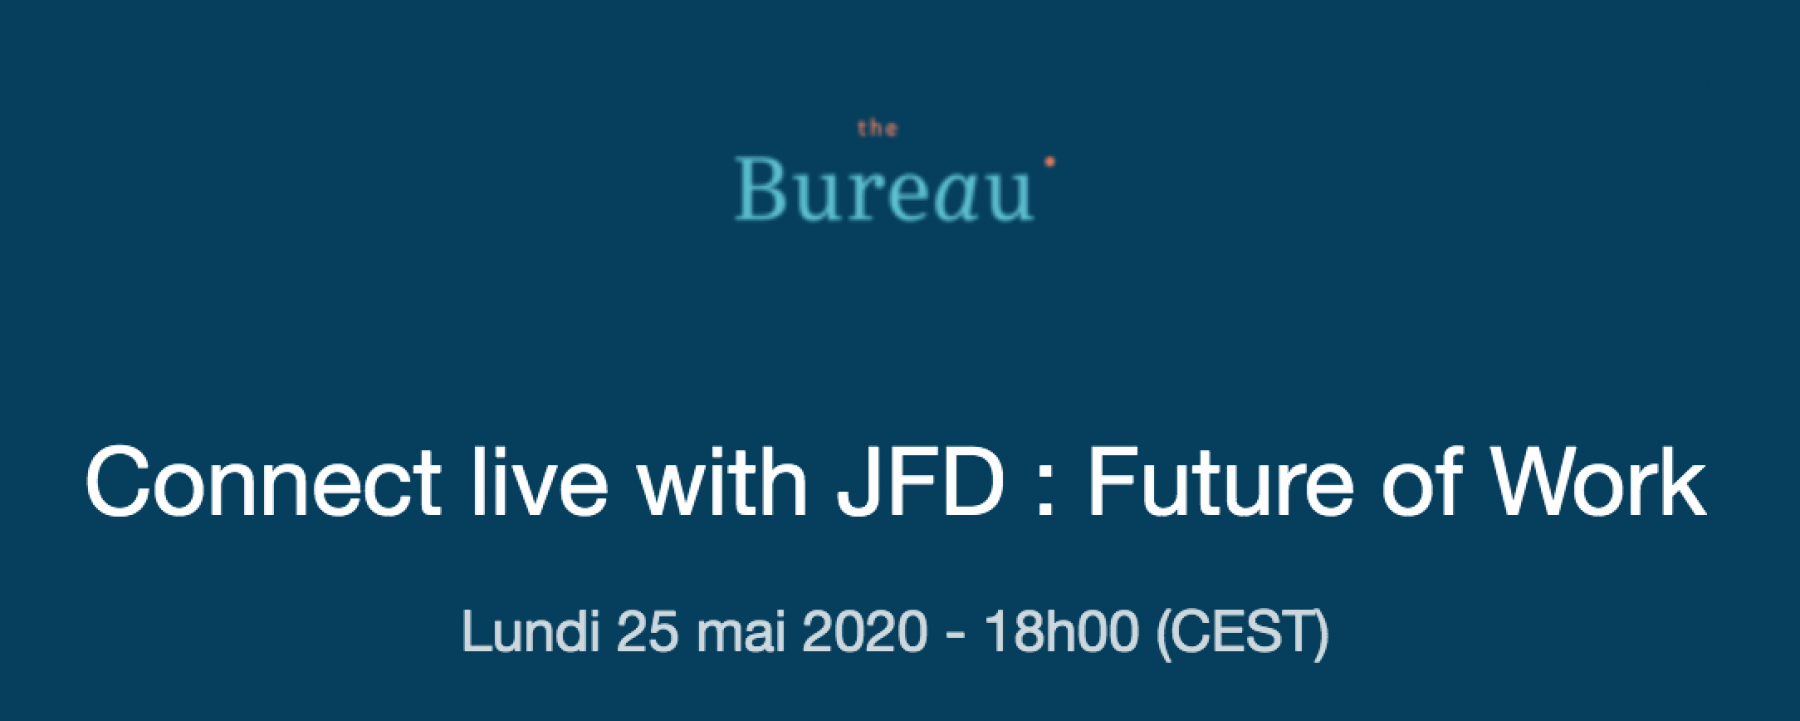 Webinar Connect live with #JFD : Future of Work, le 25 mai 2020, organisé par the bureau 